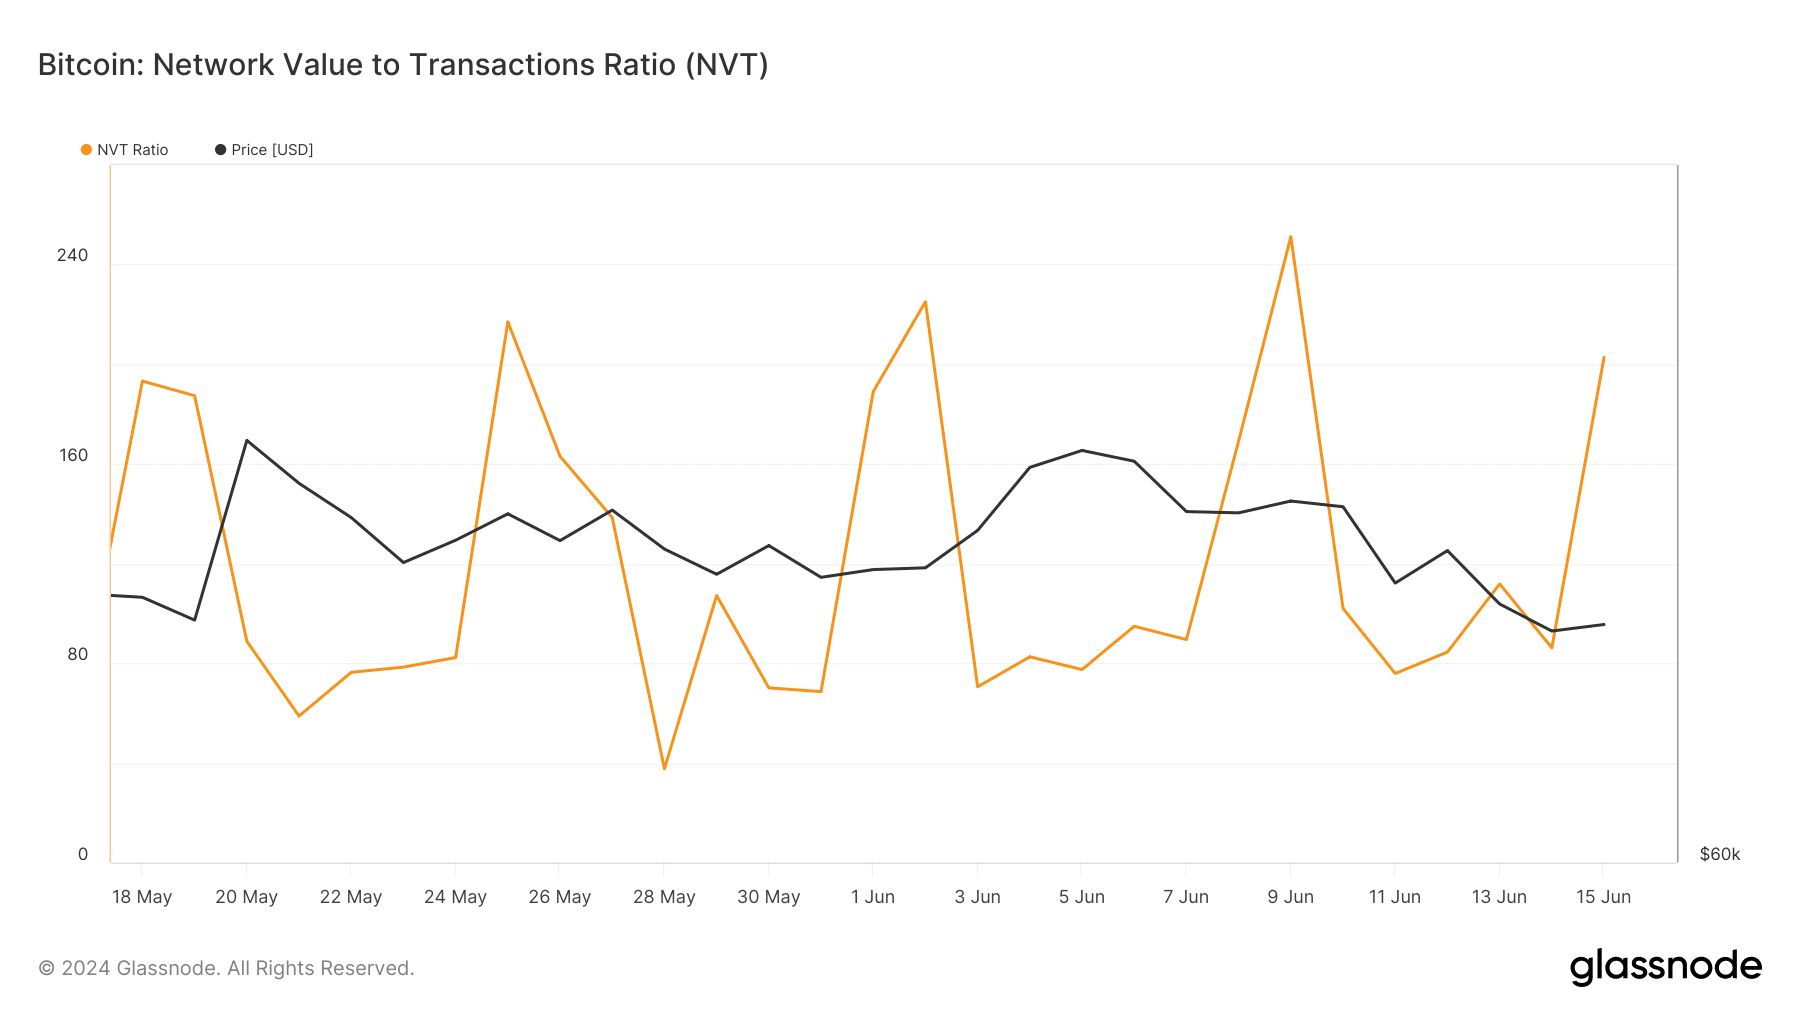 BTC's NVT ratio increased